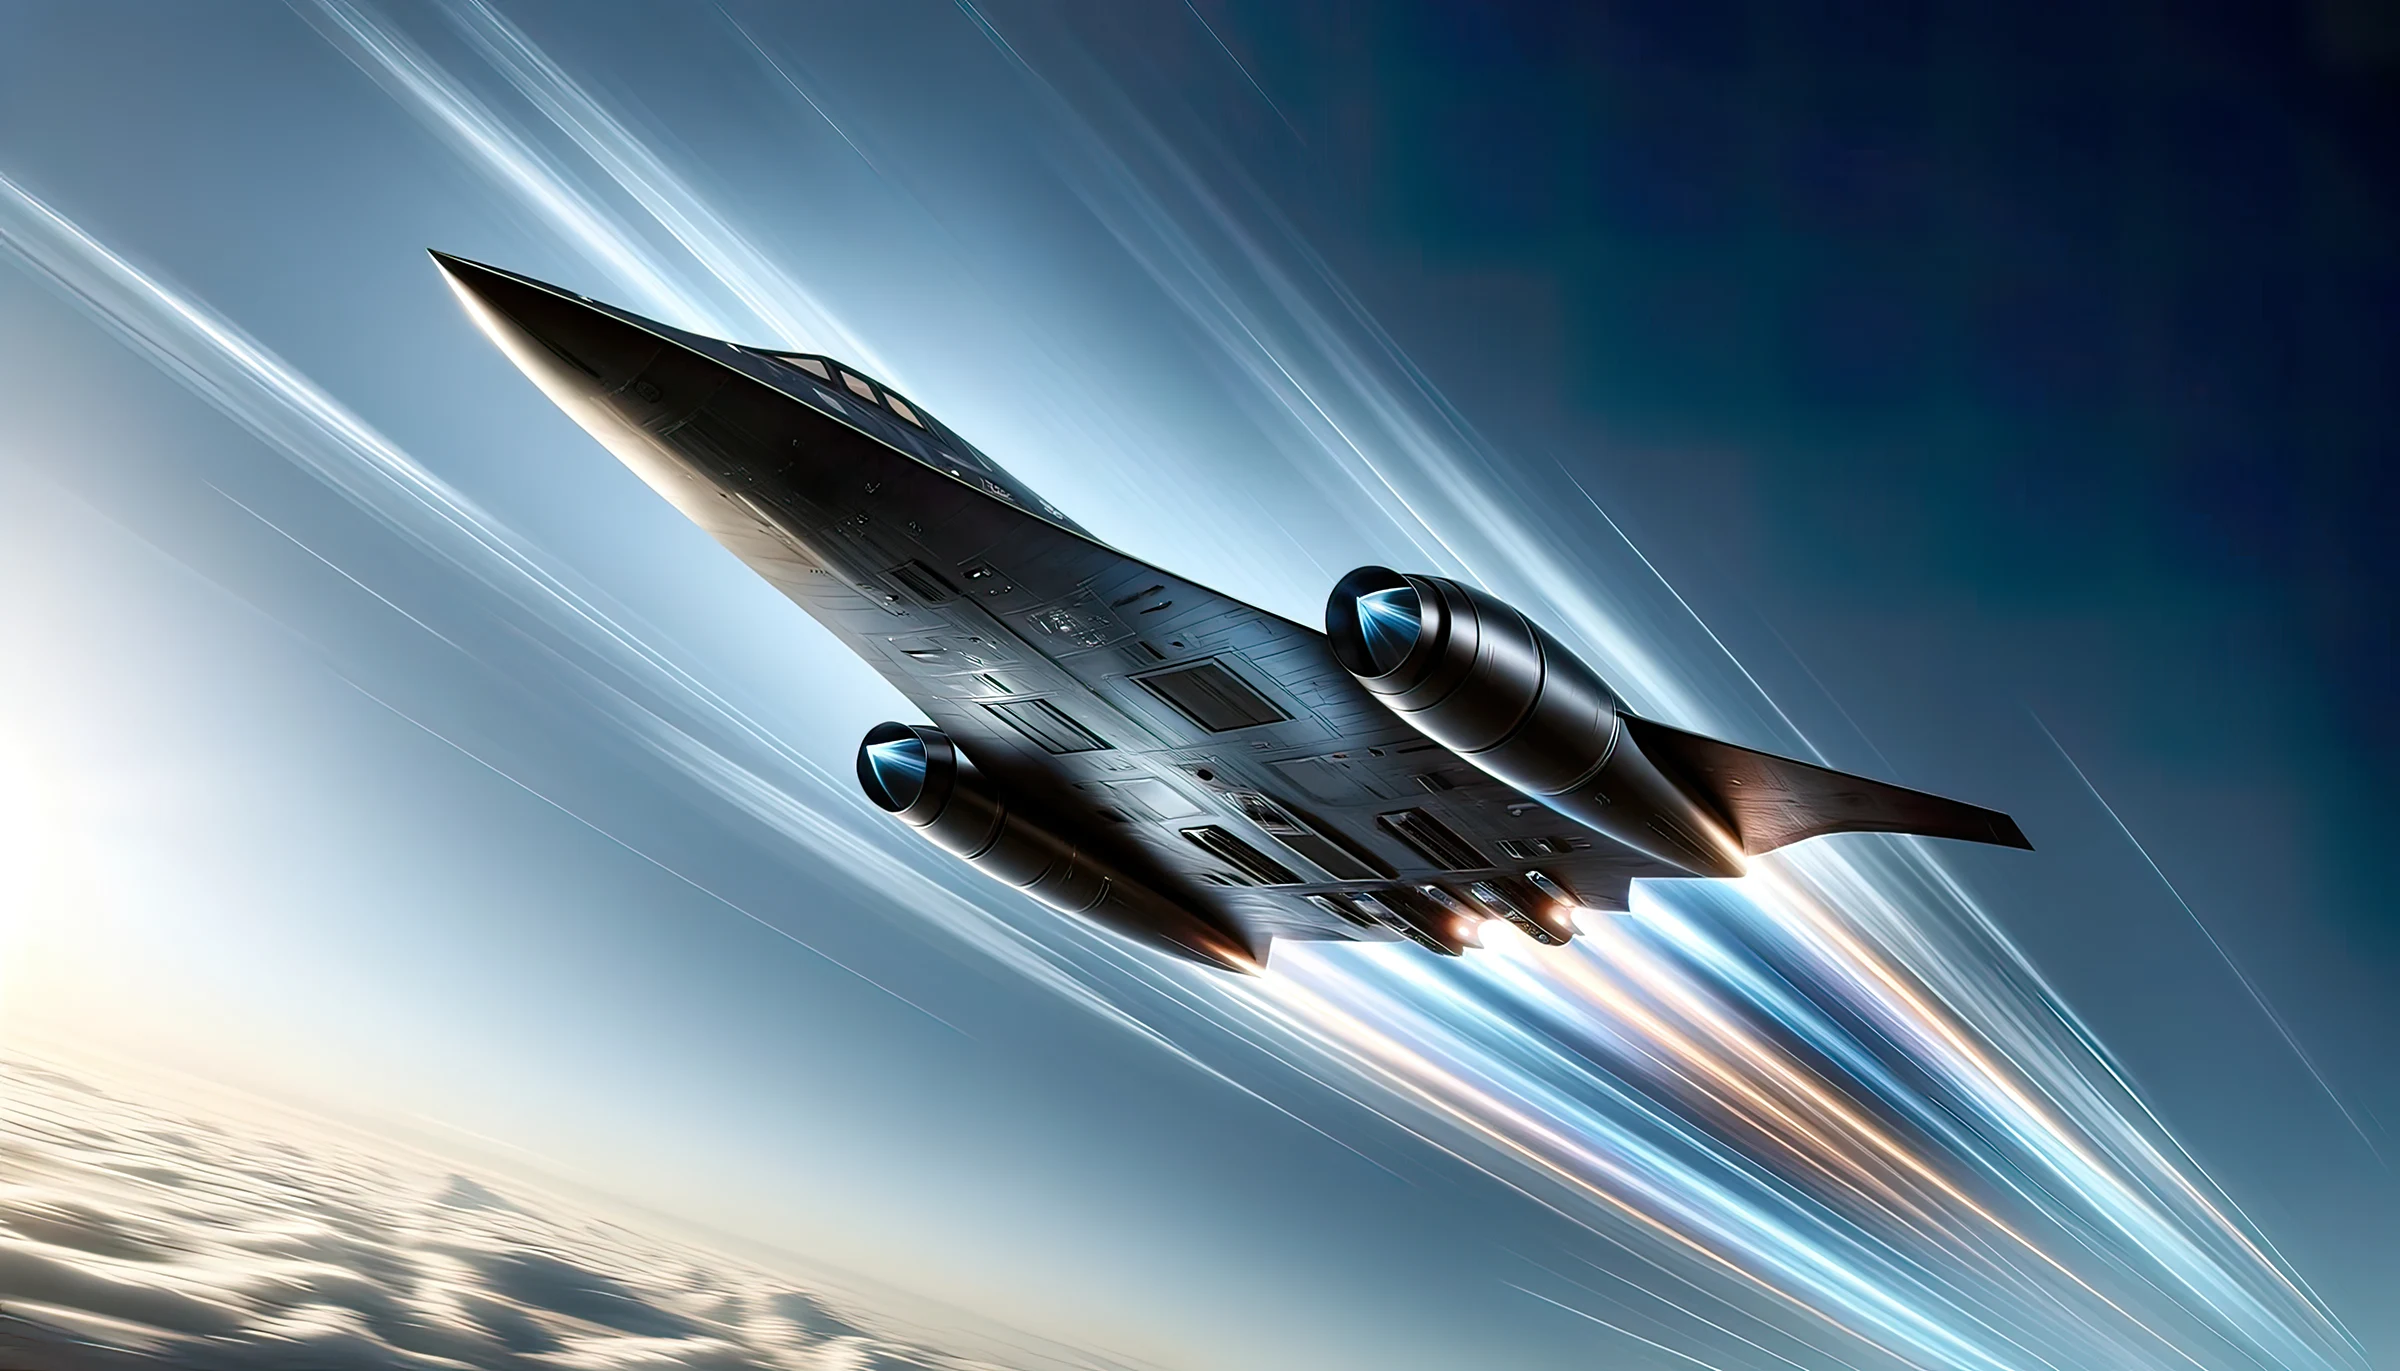 Todo sobre el misterioso Lockheed Martin SR-72 “Darkstar”